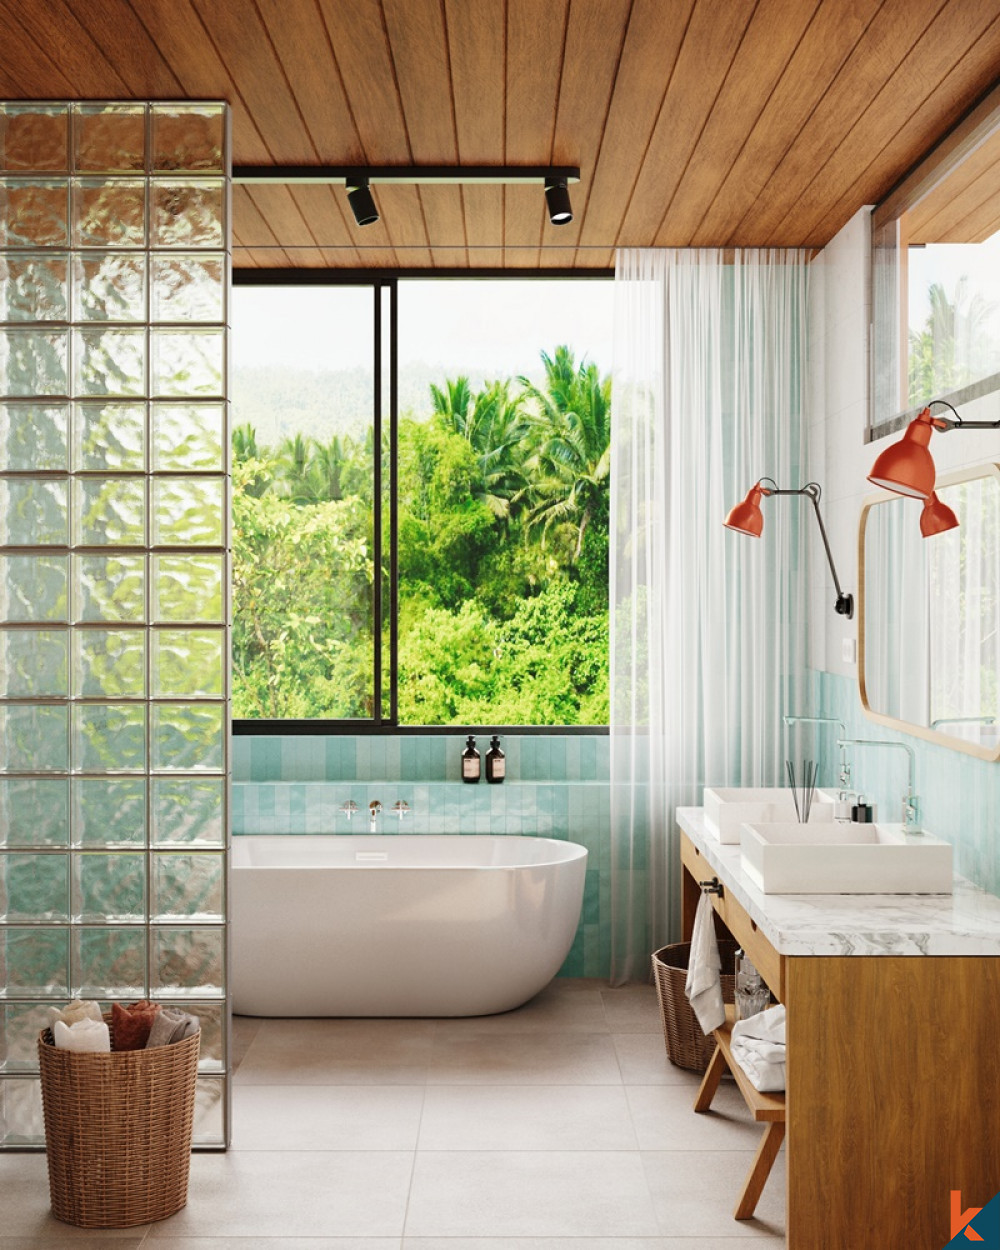 Up Coming: Embrace Serene Luxury 2-Bedroom Villa for Sale in Ubud